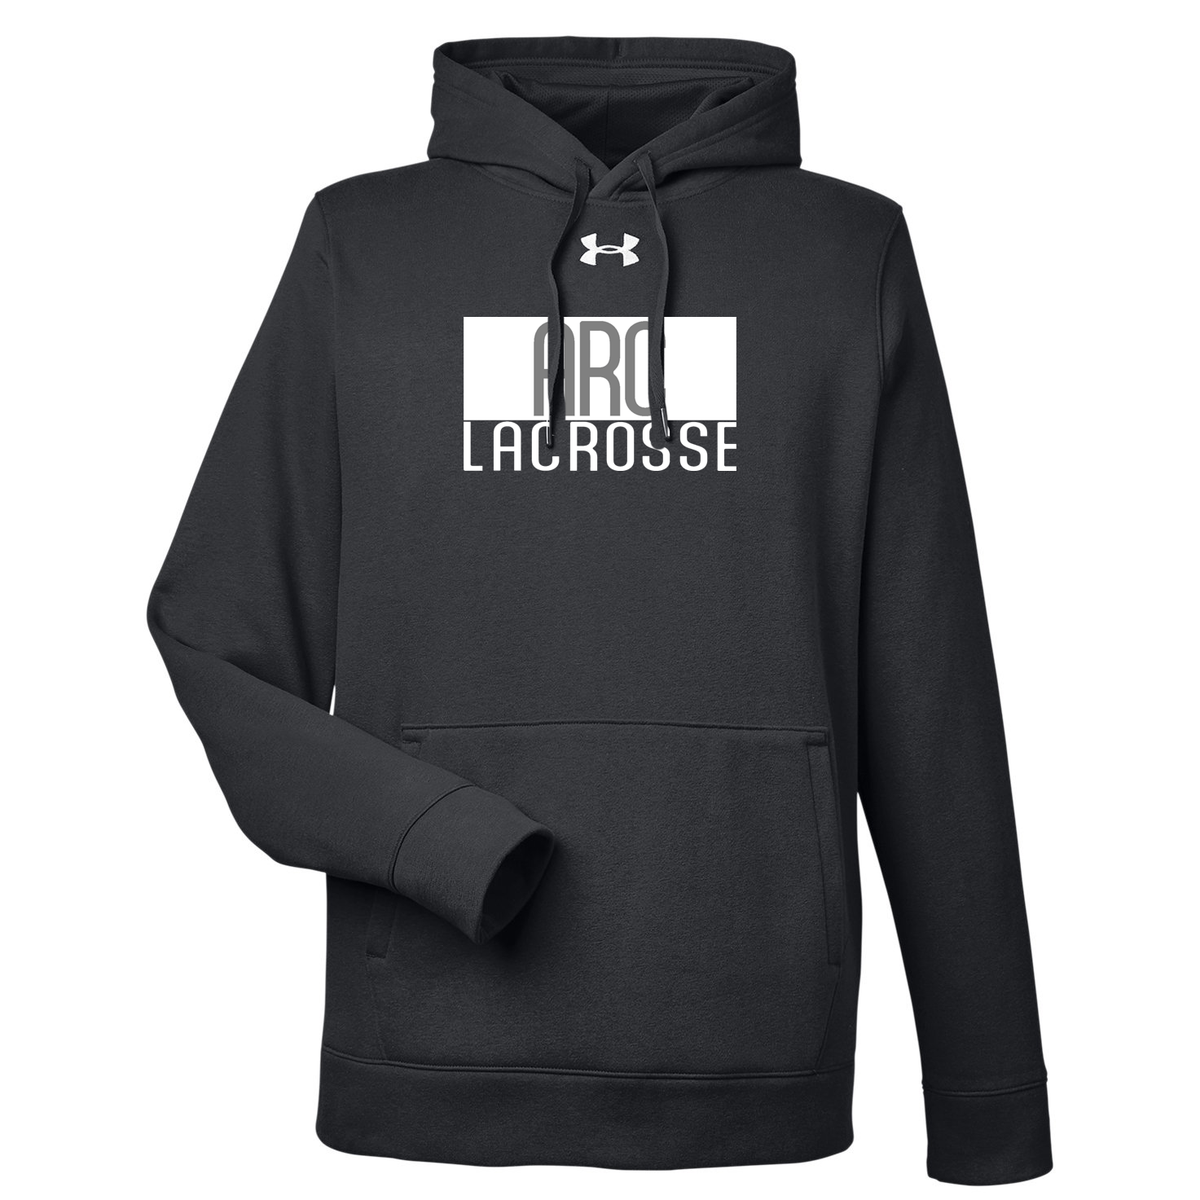 Arc Lacrosse Club Under Armour Hustle Pullover Hooded Sweatshirt